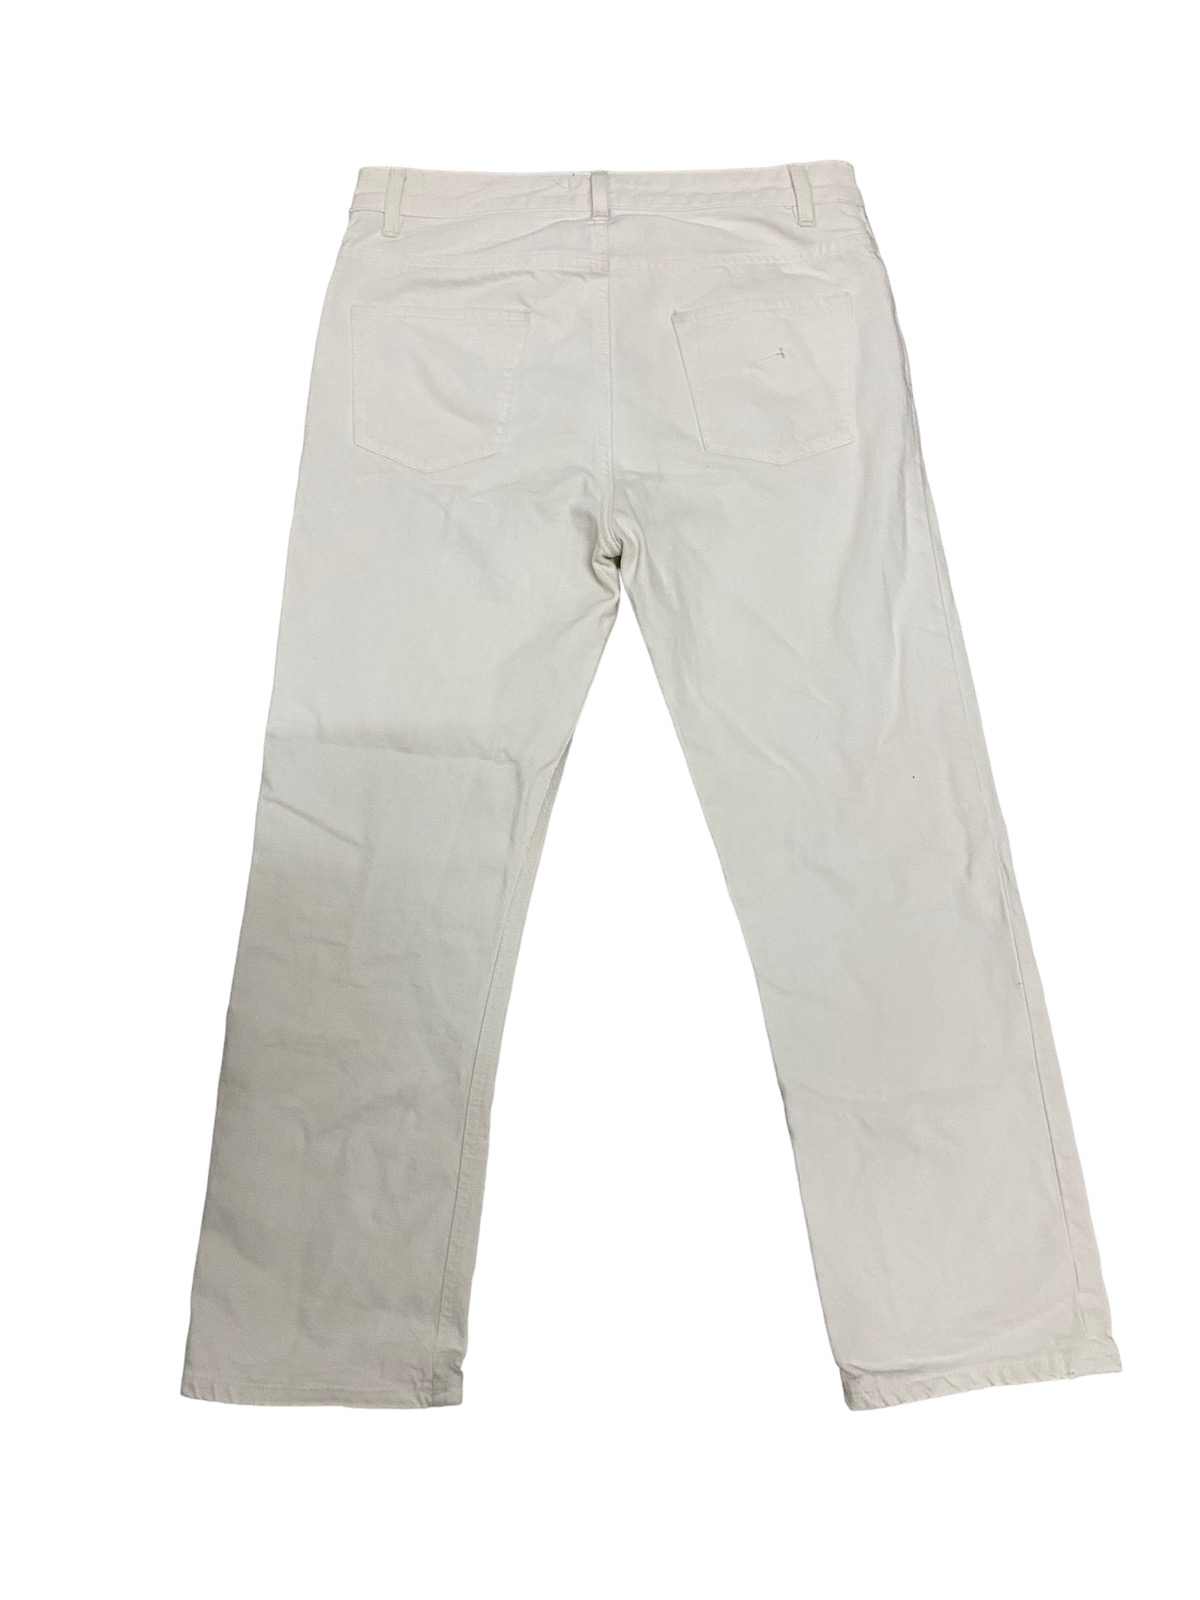 Vintage Acne Studios Pop White Denim Jeans - 2